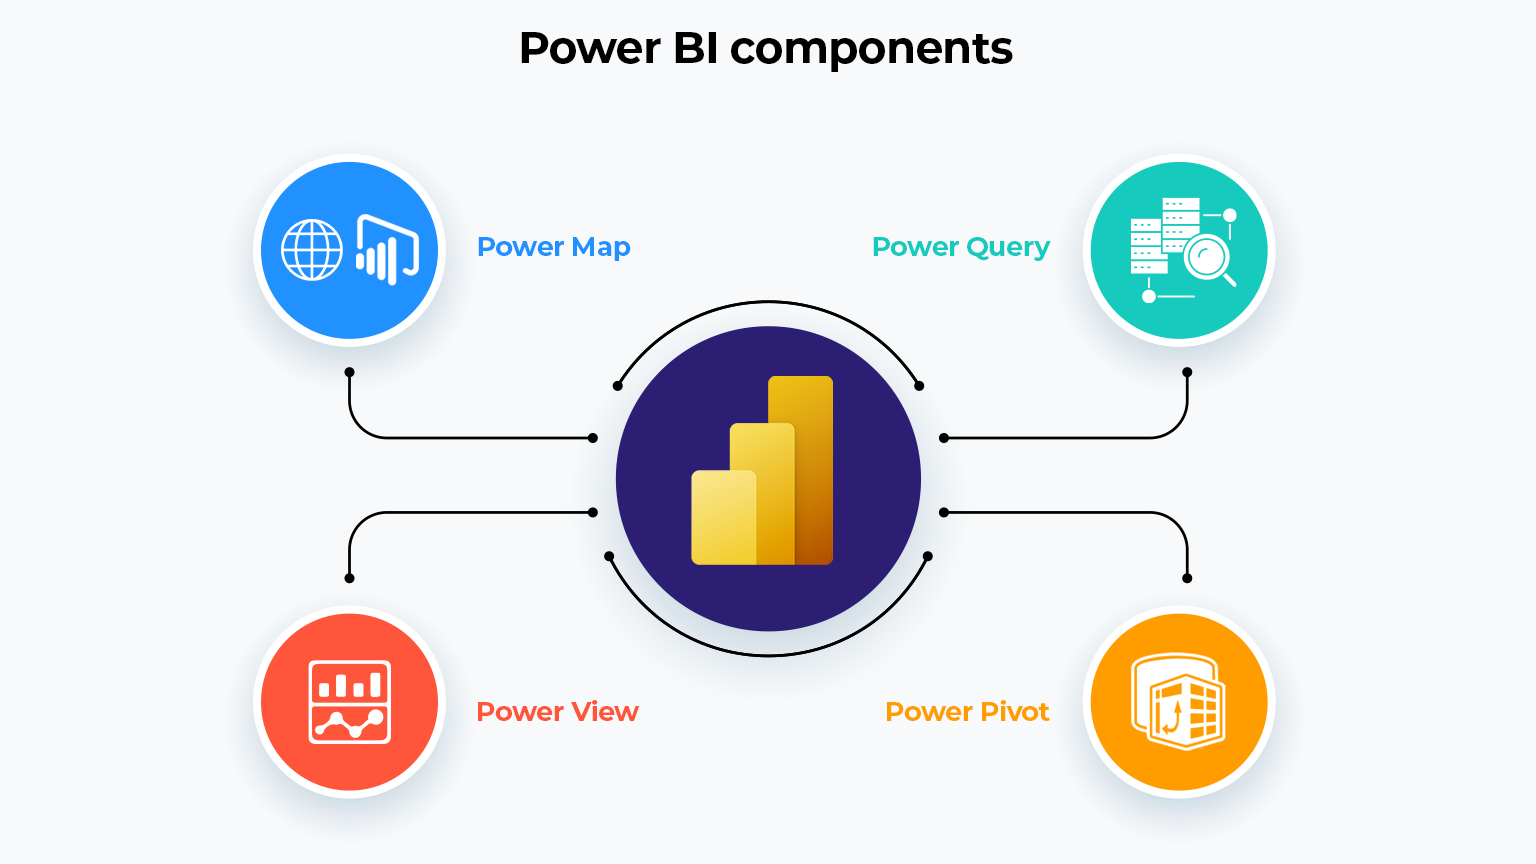 Power BI components